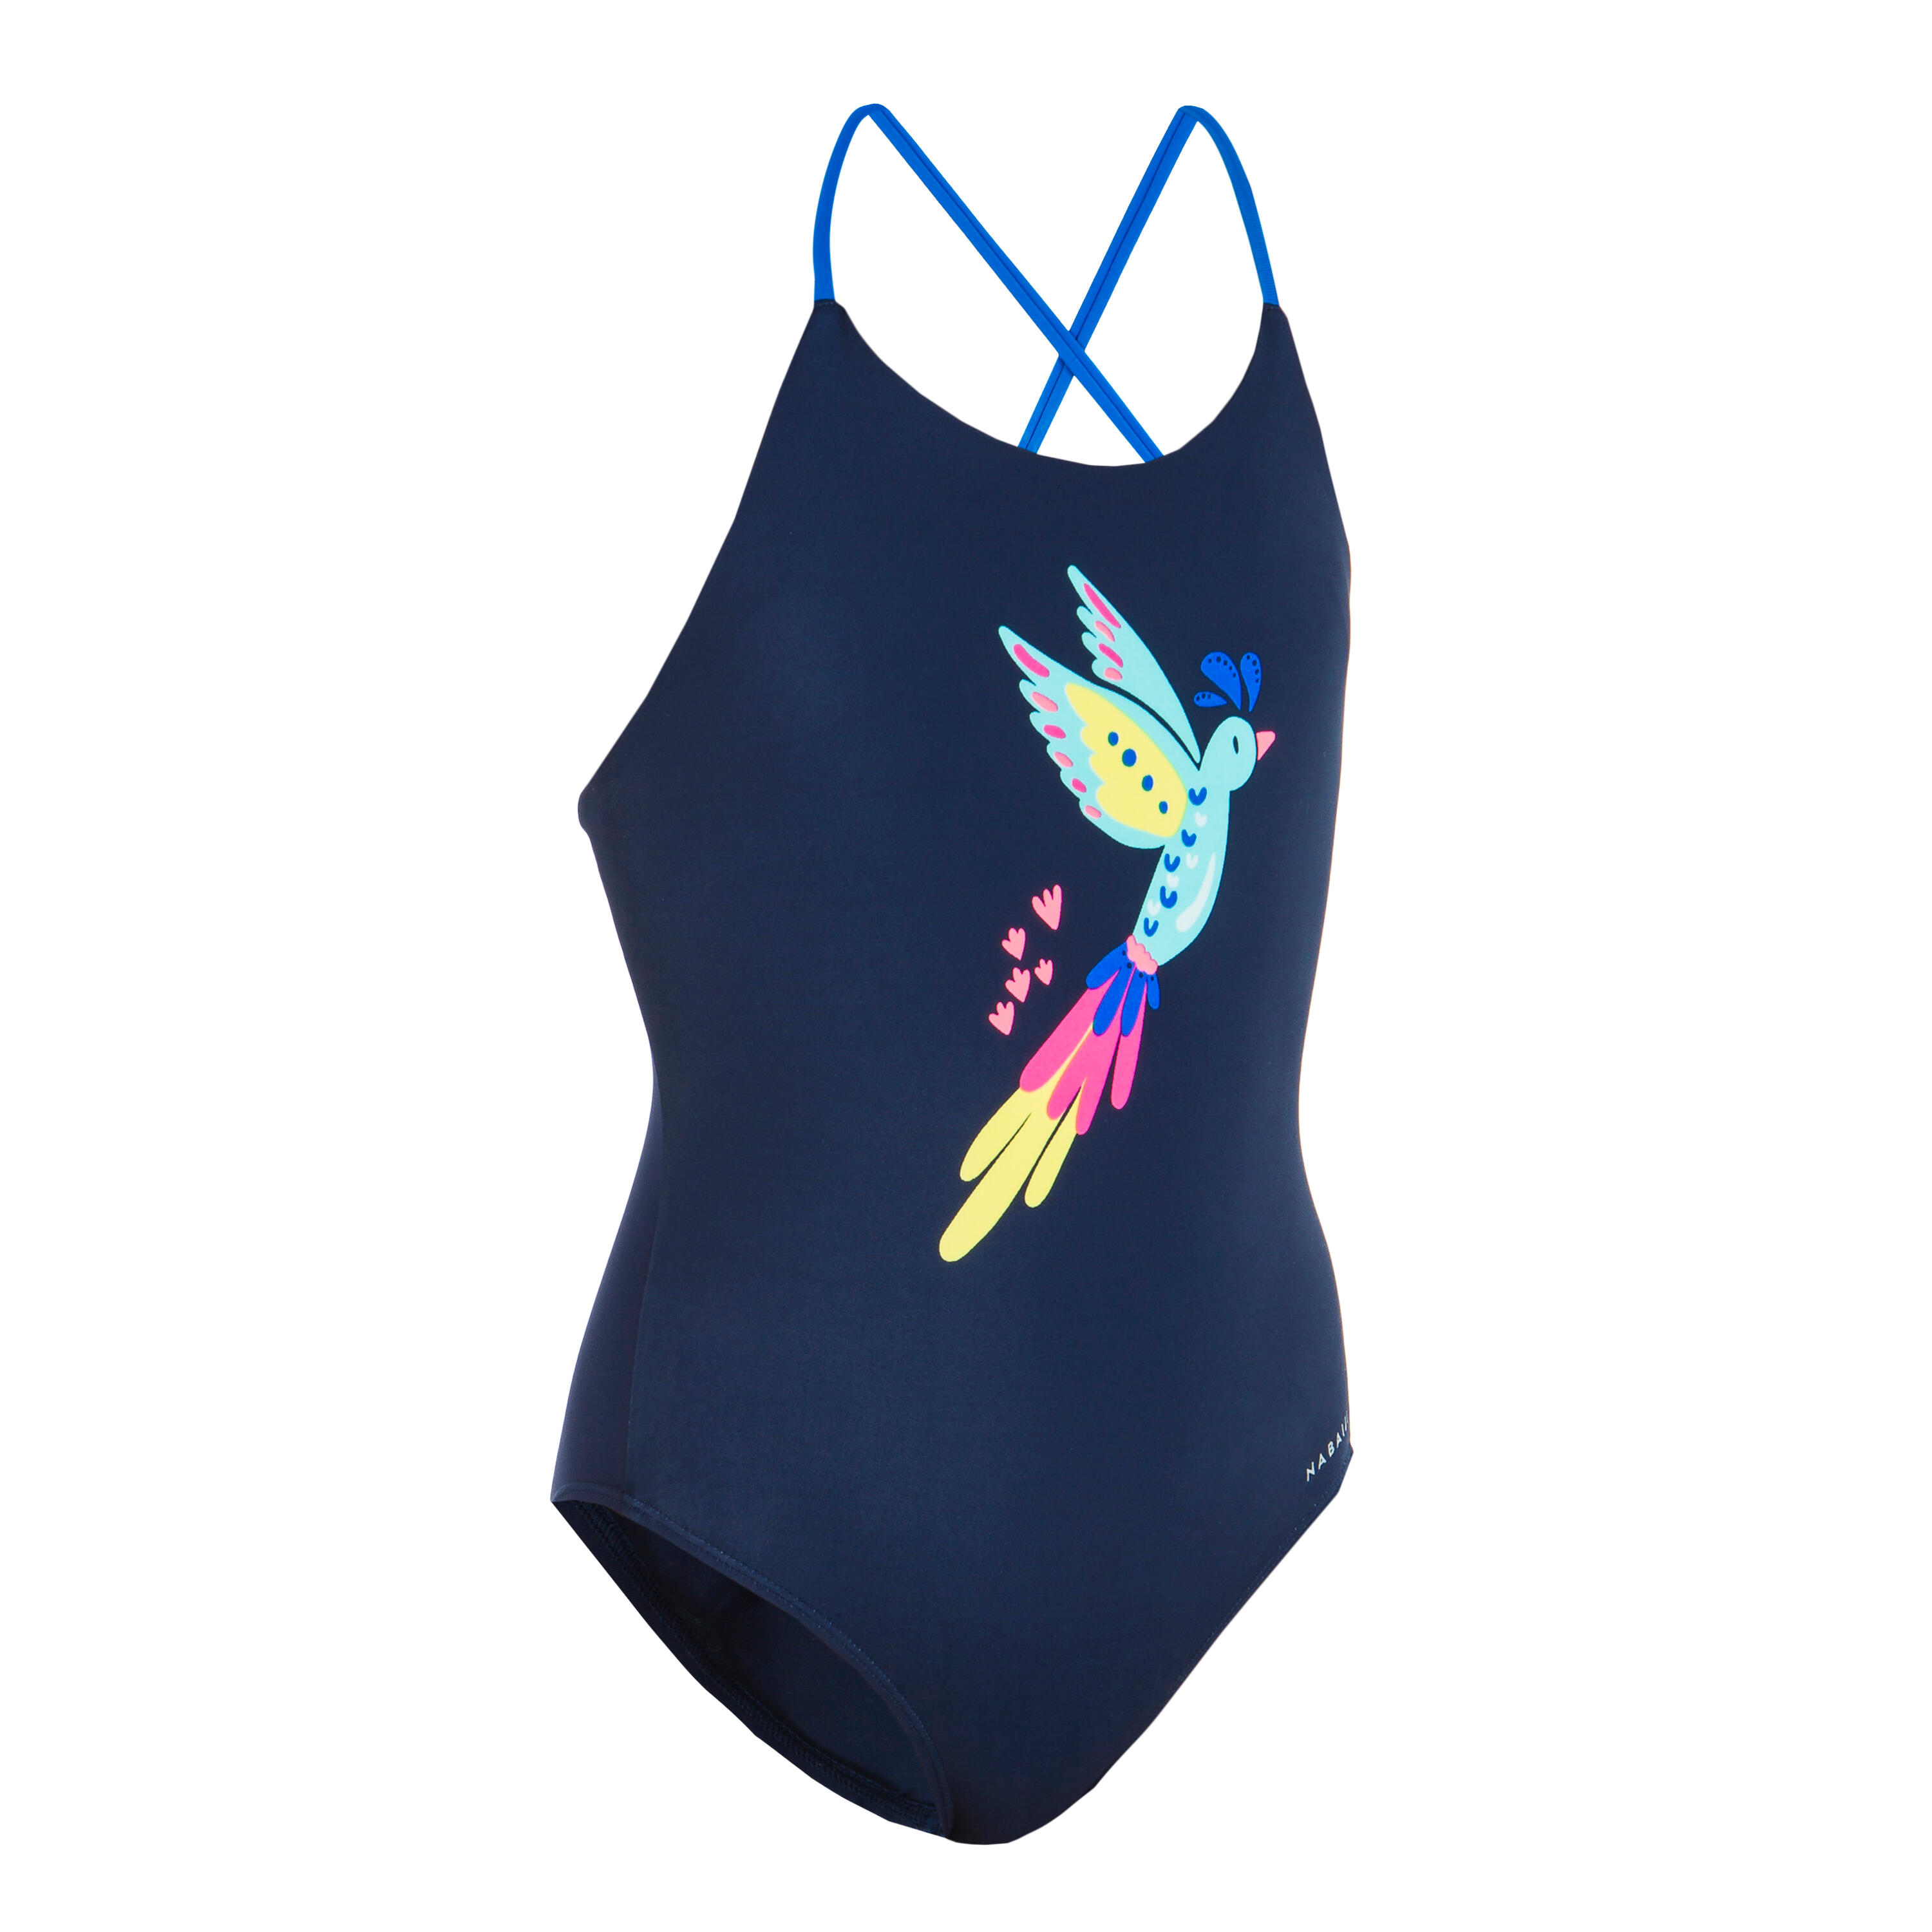 girl's 1-piece long sleeve swimming suit MAYA navy blue - Decathlon